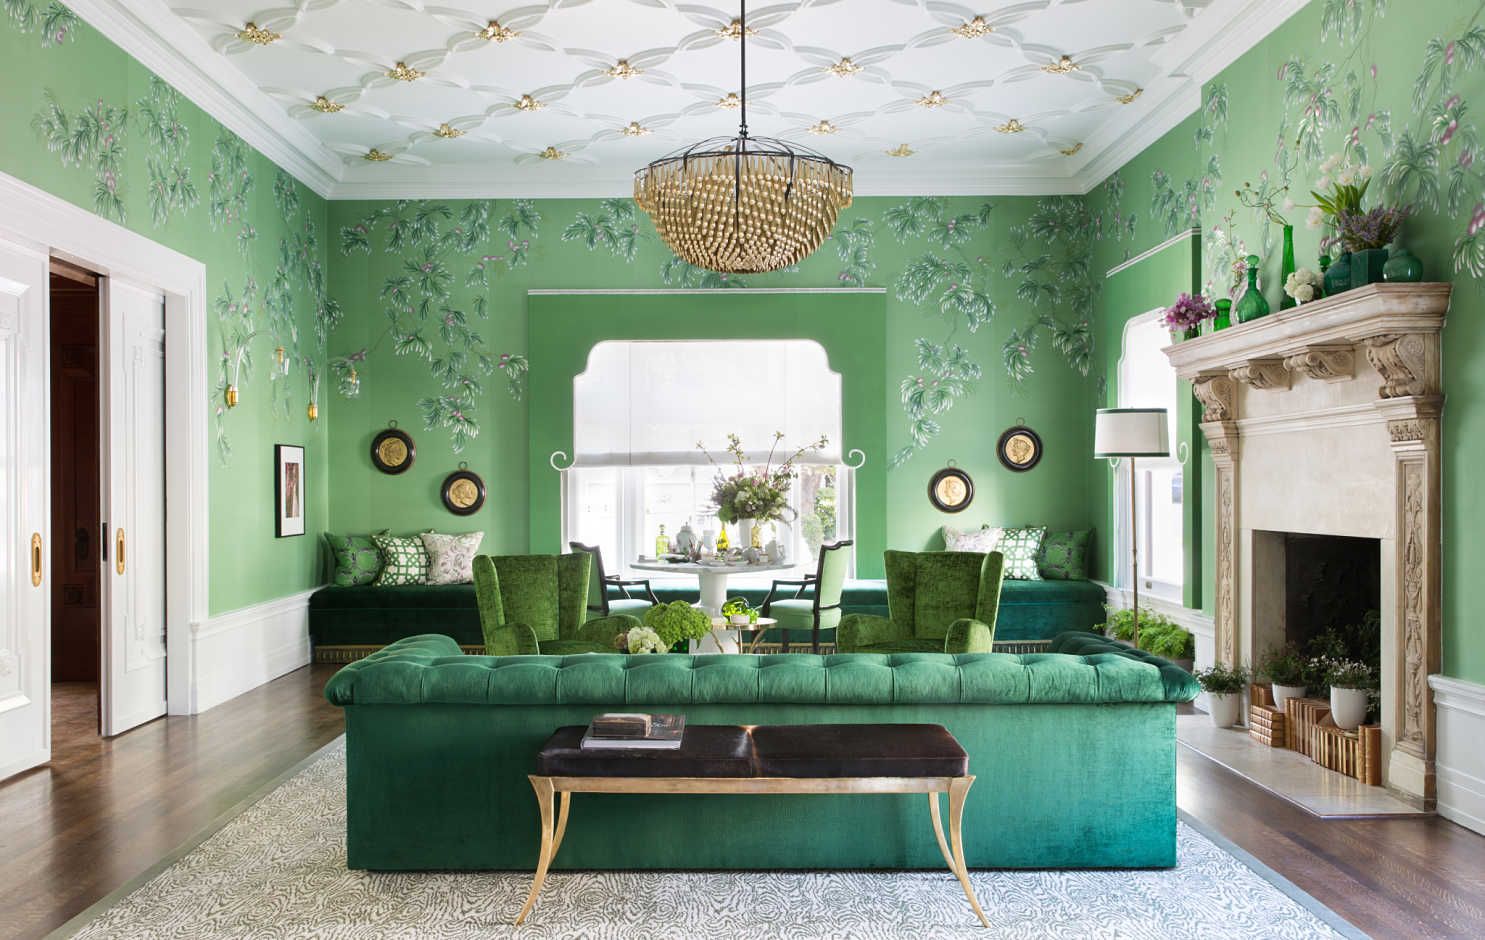 Green Living Room Ideas: 15 Gorgeous Verdant Schemes